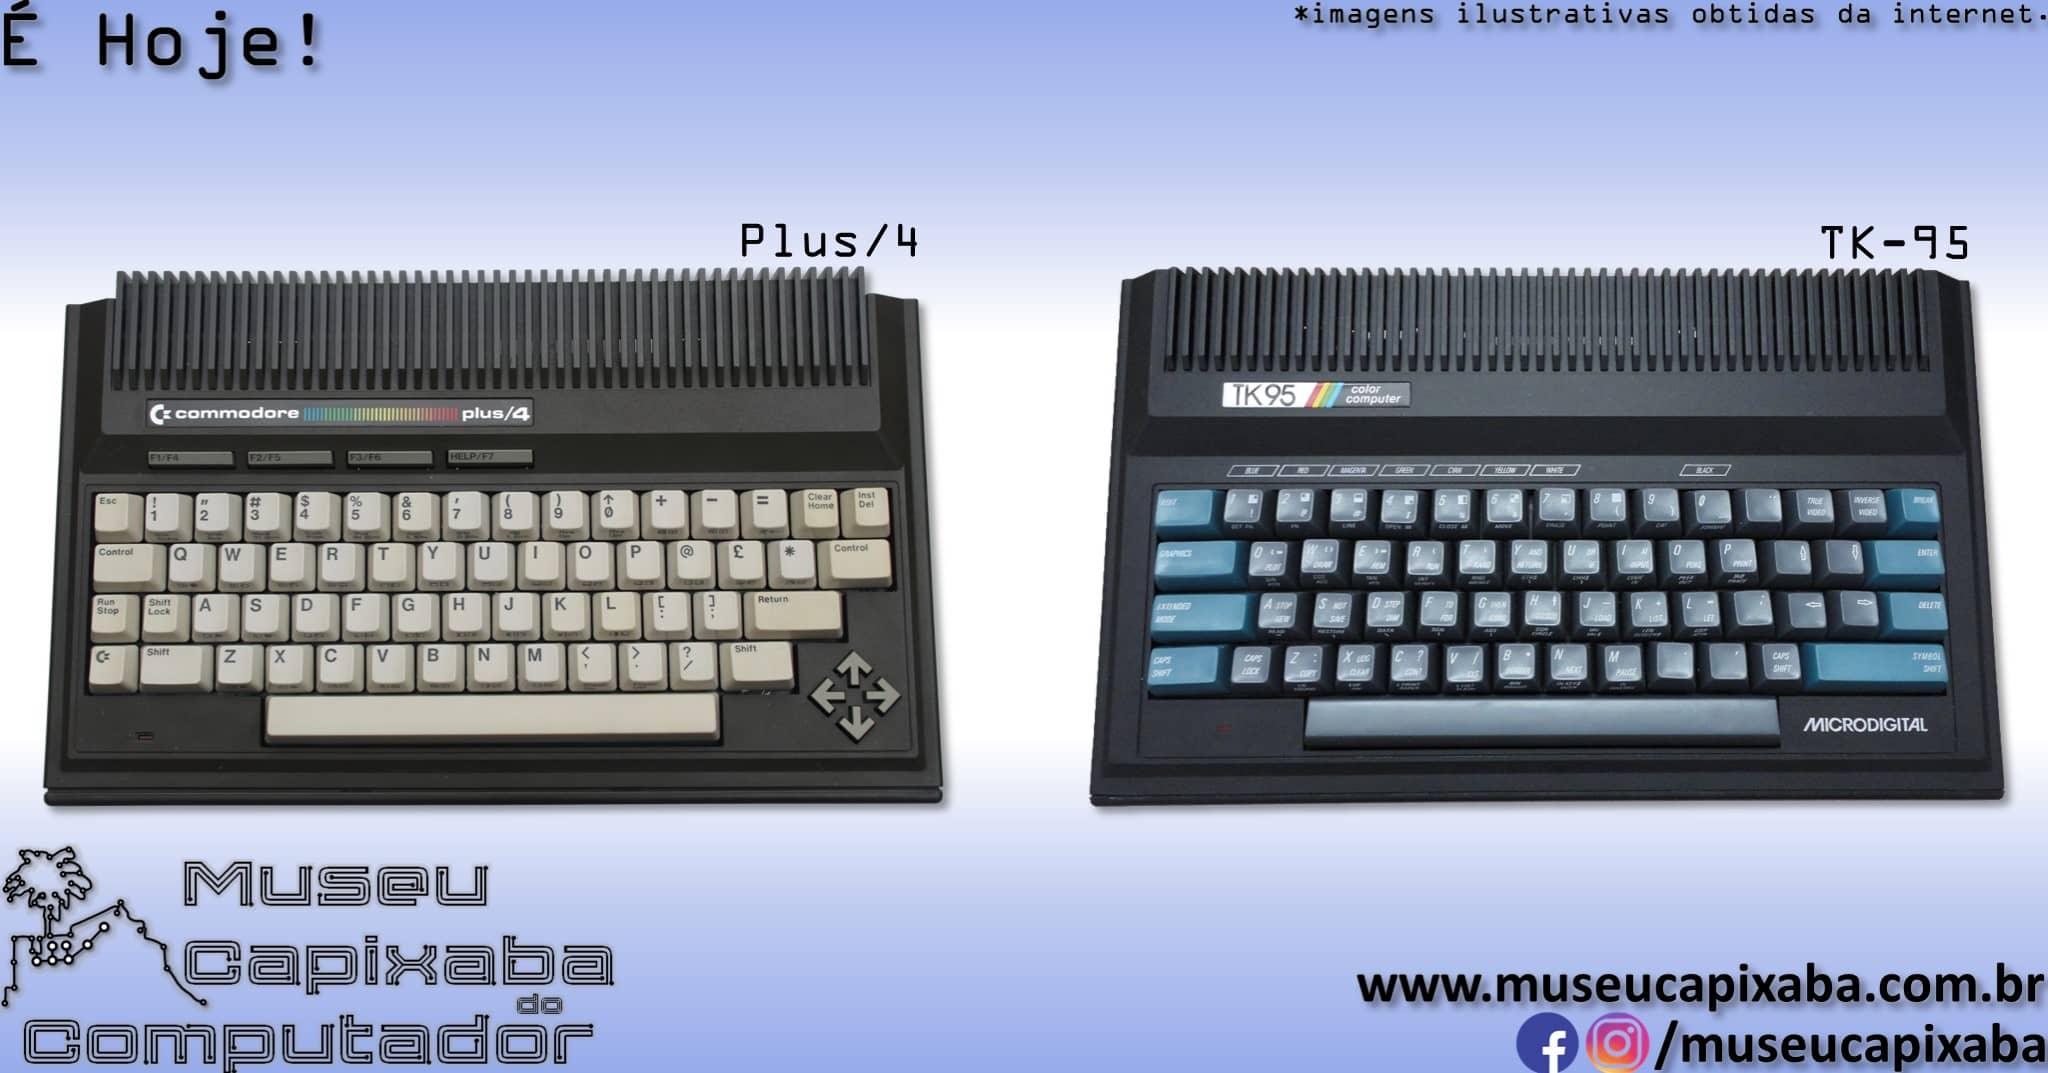 Commodore Plus/4 e Microdigital TK-95